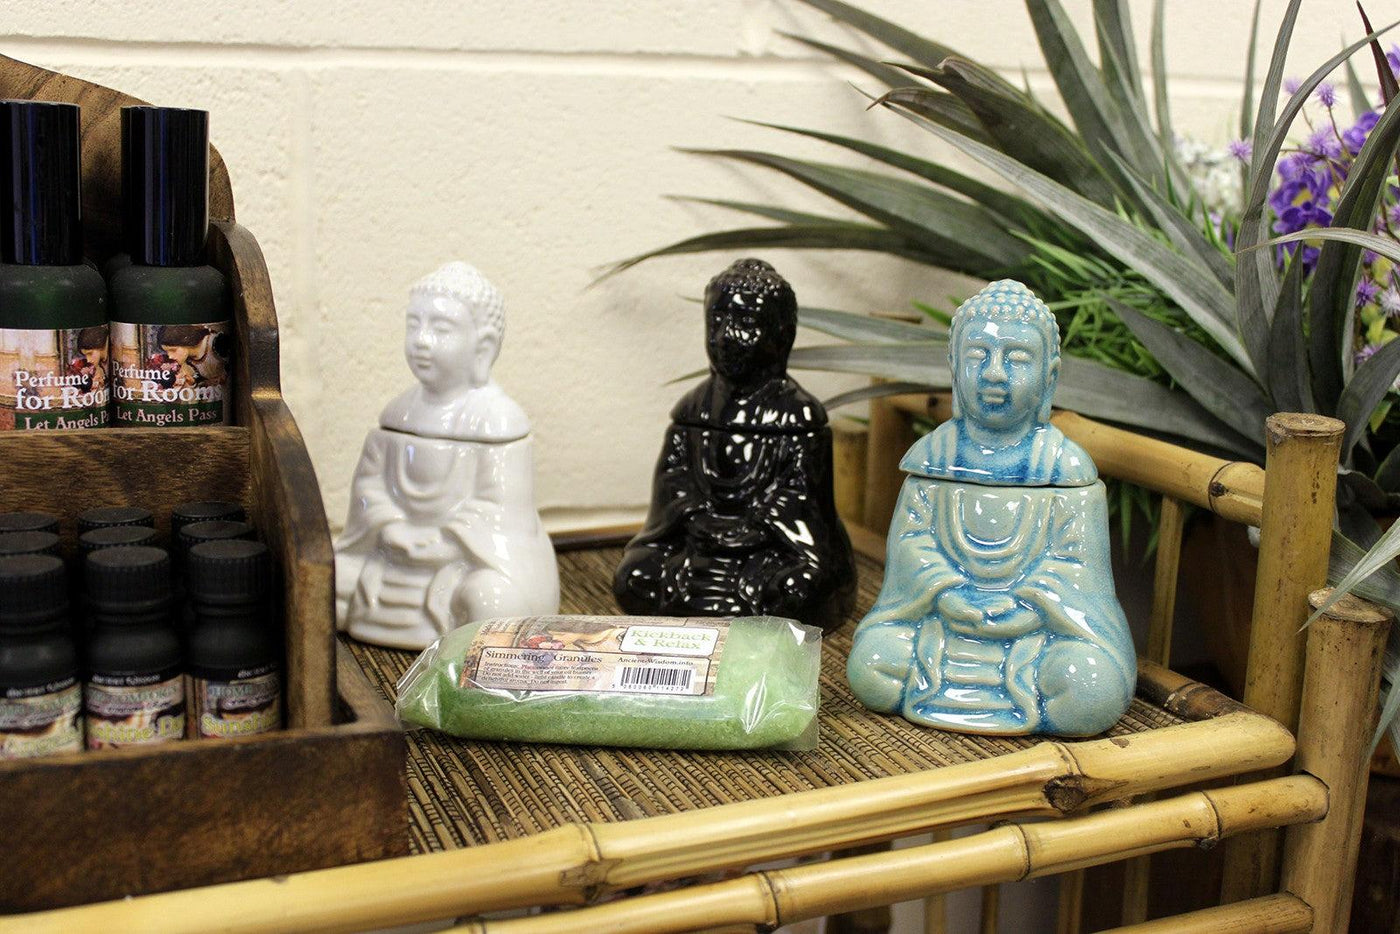 Black Glossy Sitting Buddha Oil And Wax Melts Burner.